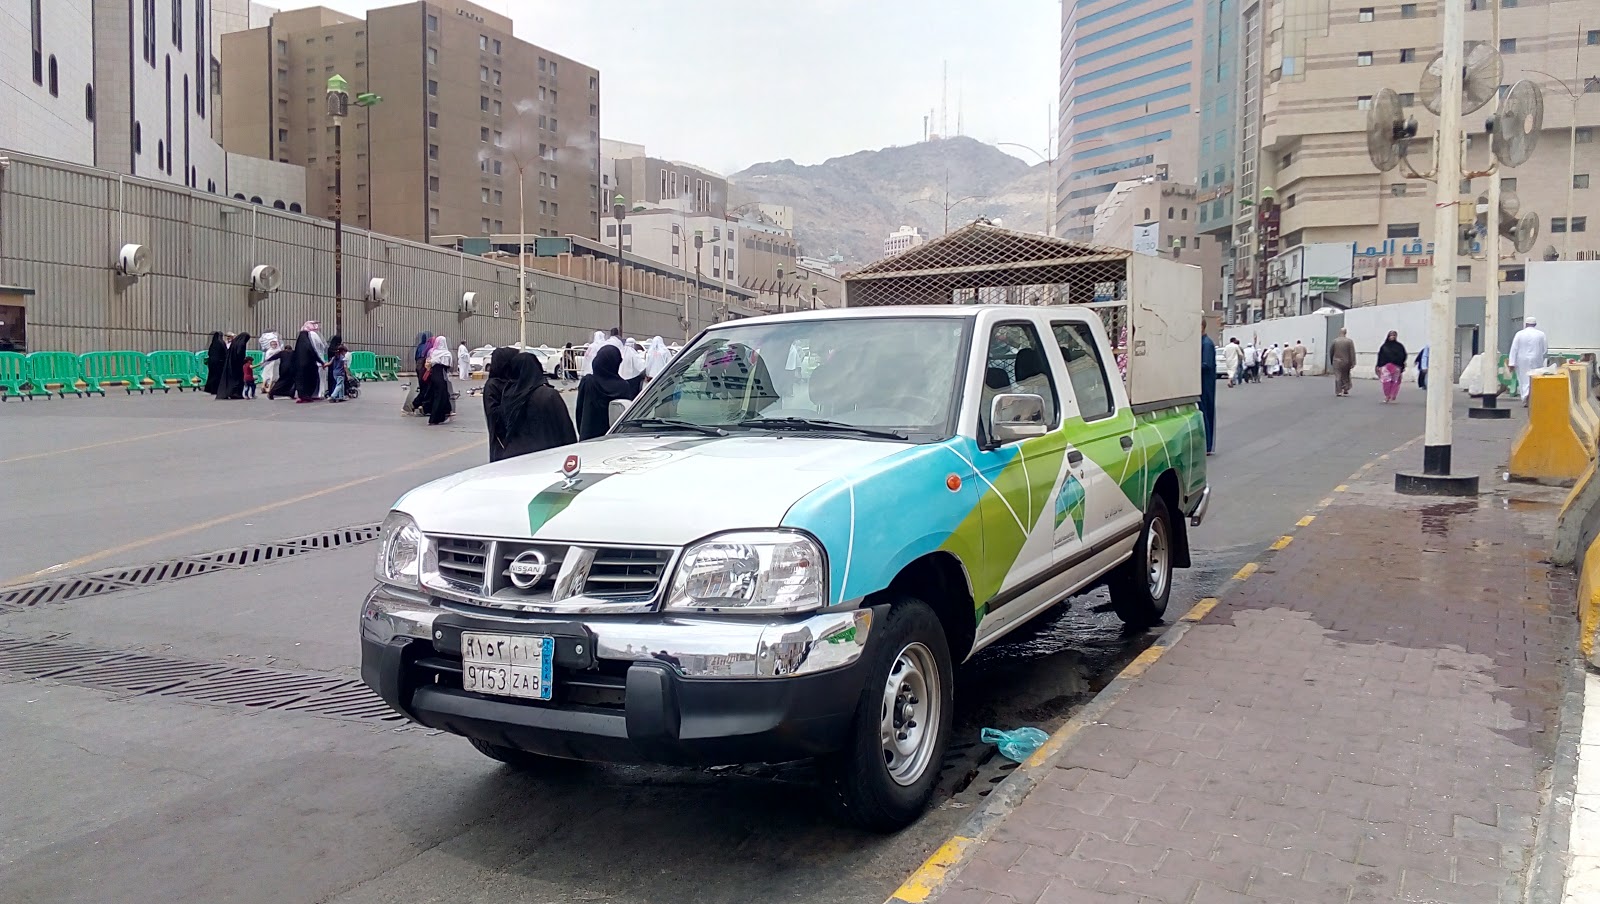 Penampakan Mobil Patroli Polisi Kota Kota Mekkah Arab Saudi LAPAK